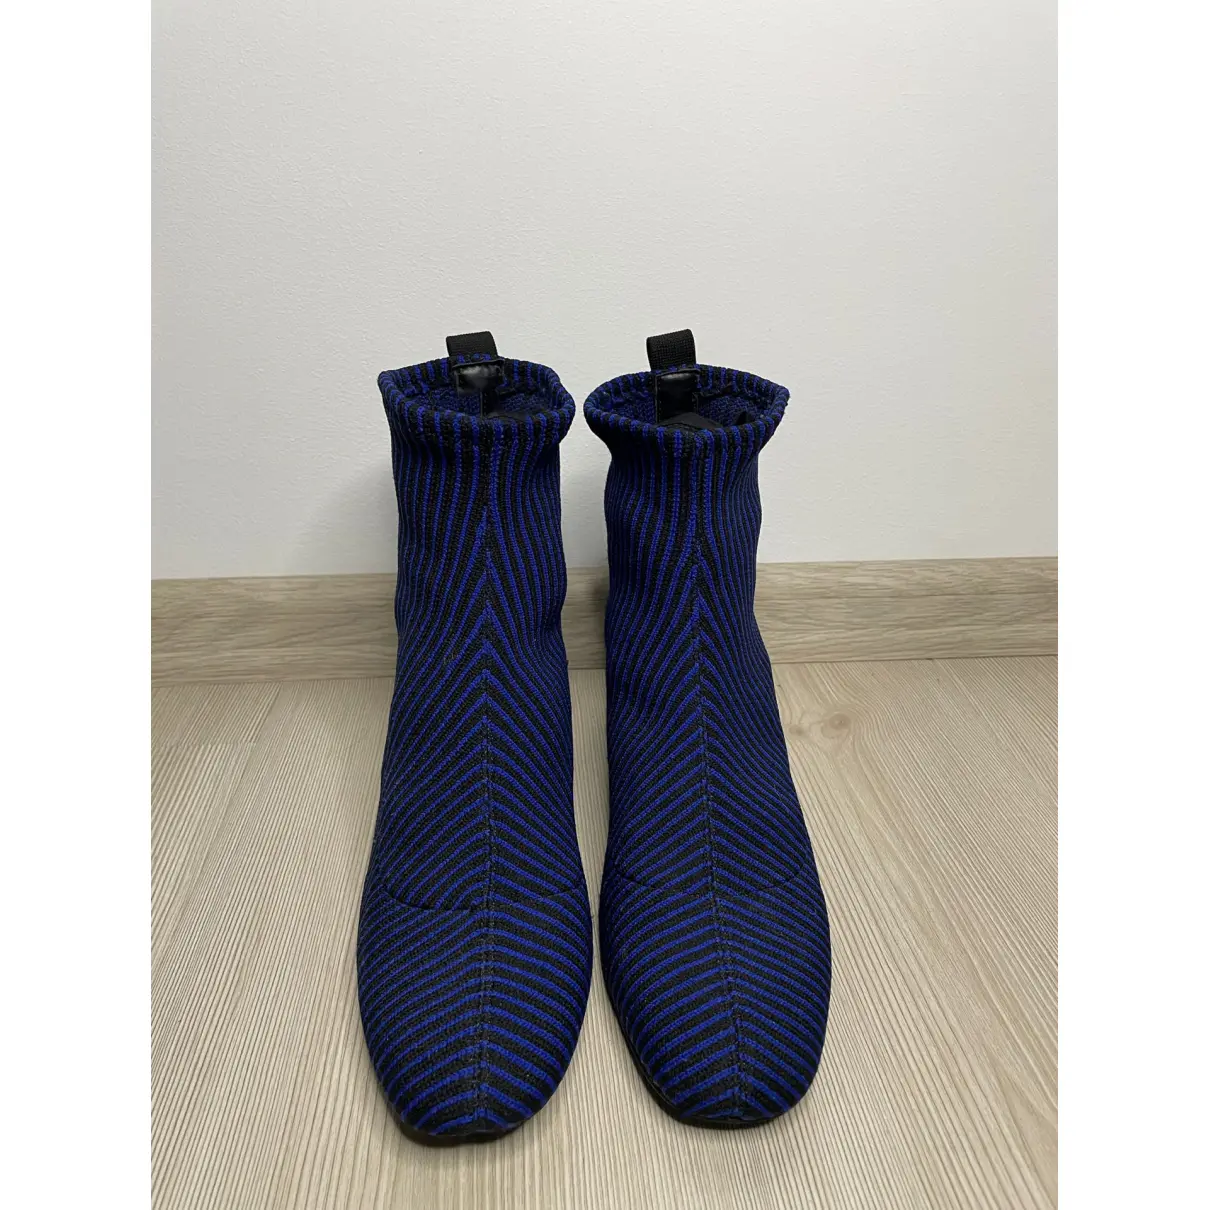 Buy Zara Ankle boots online